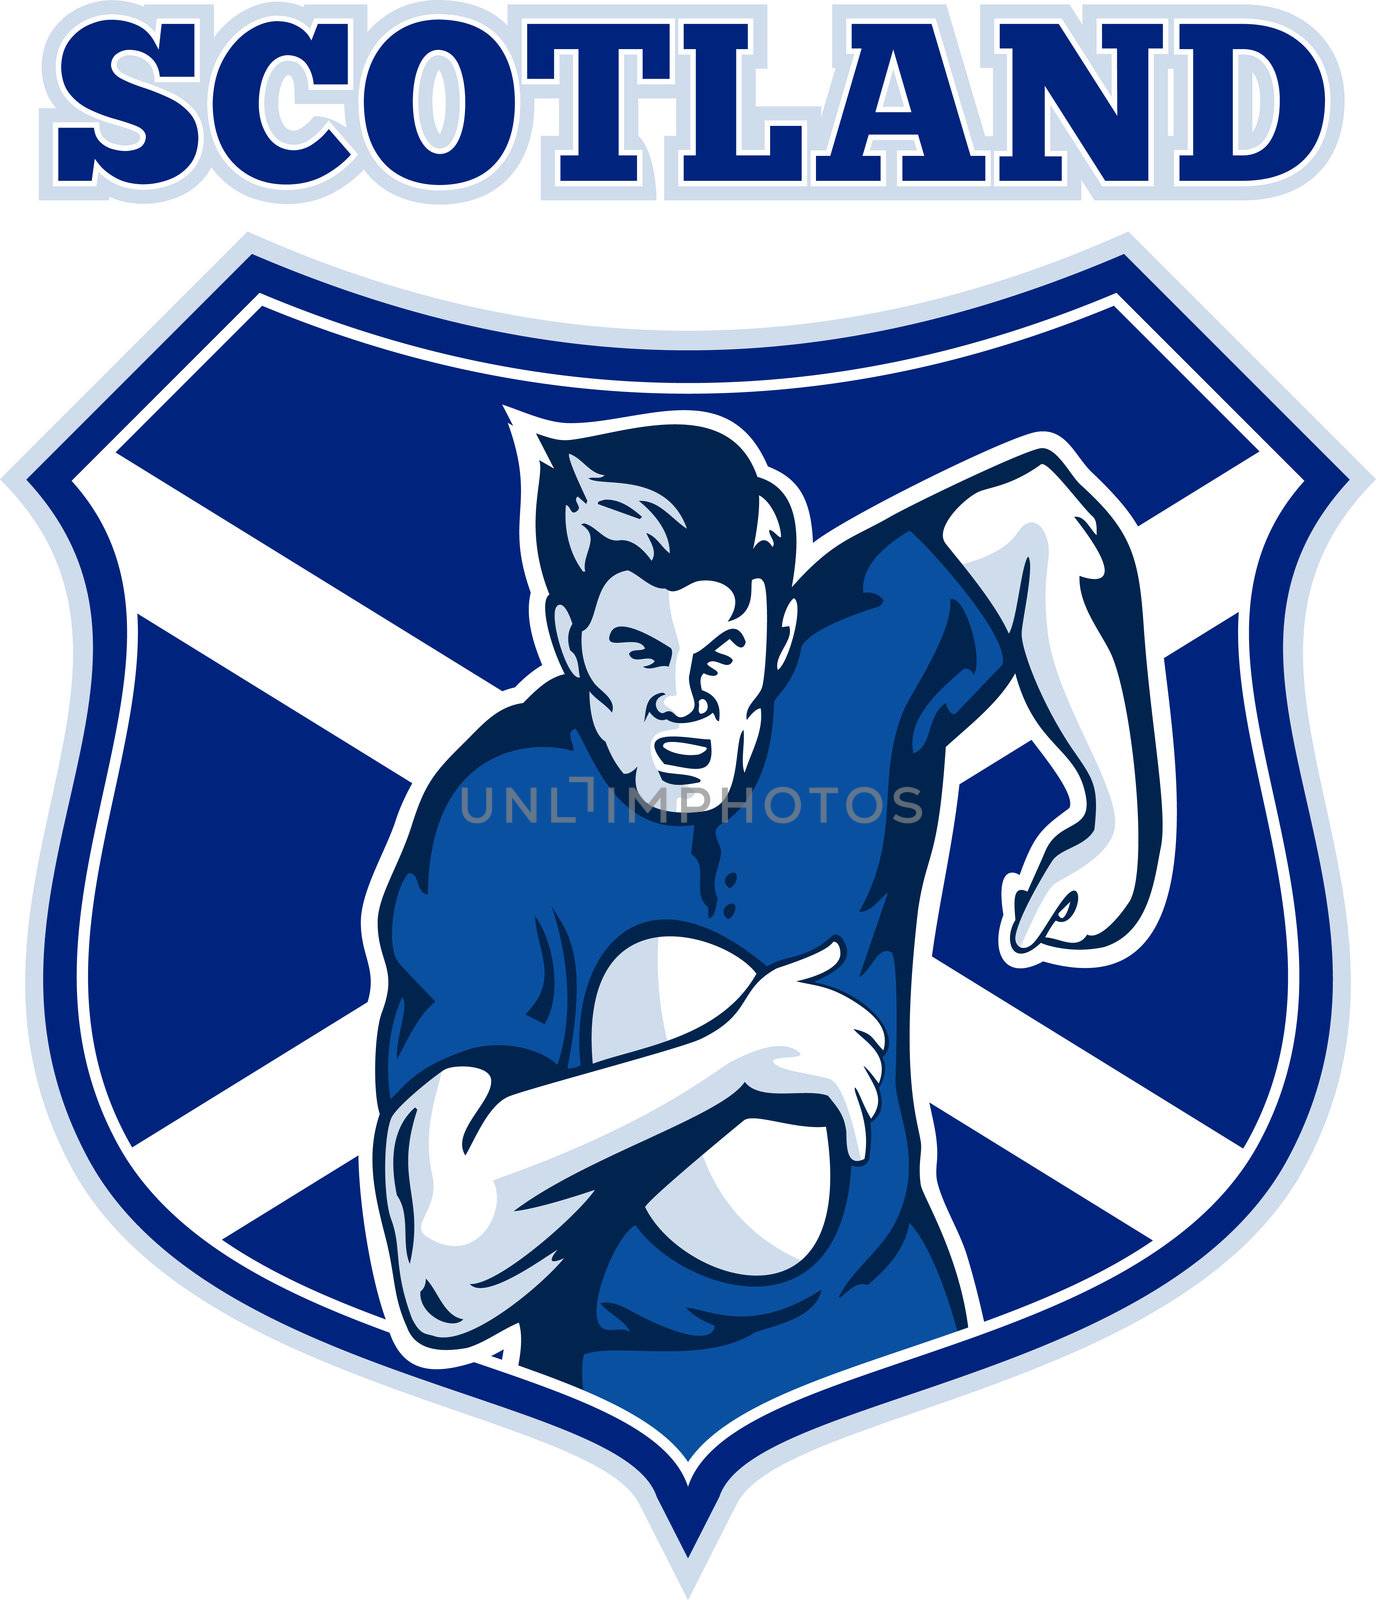 rugby player scotland flag shield by patrimonio